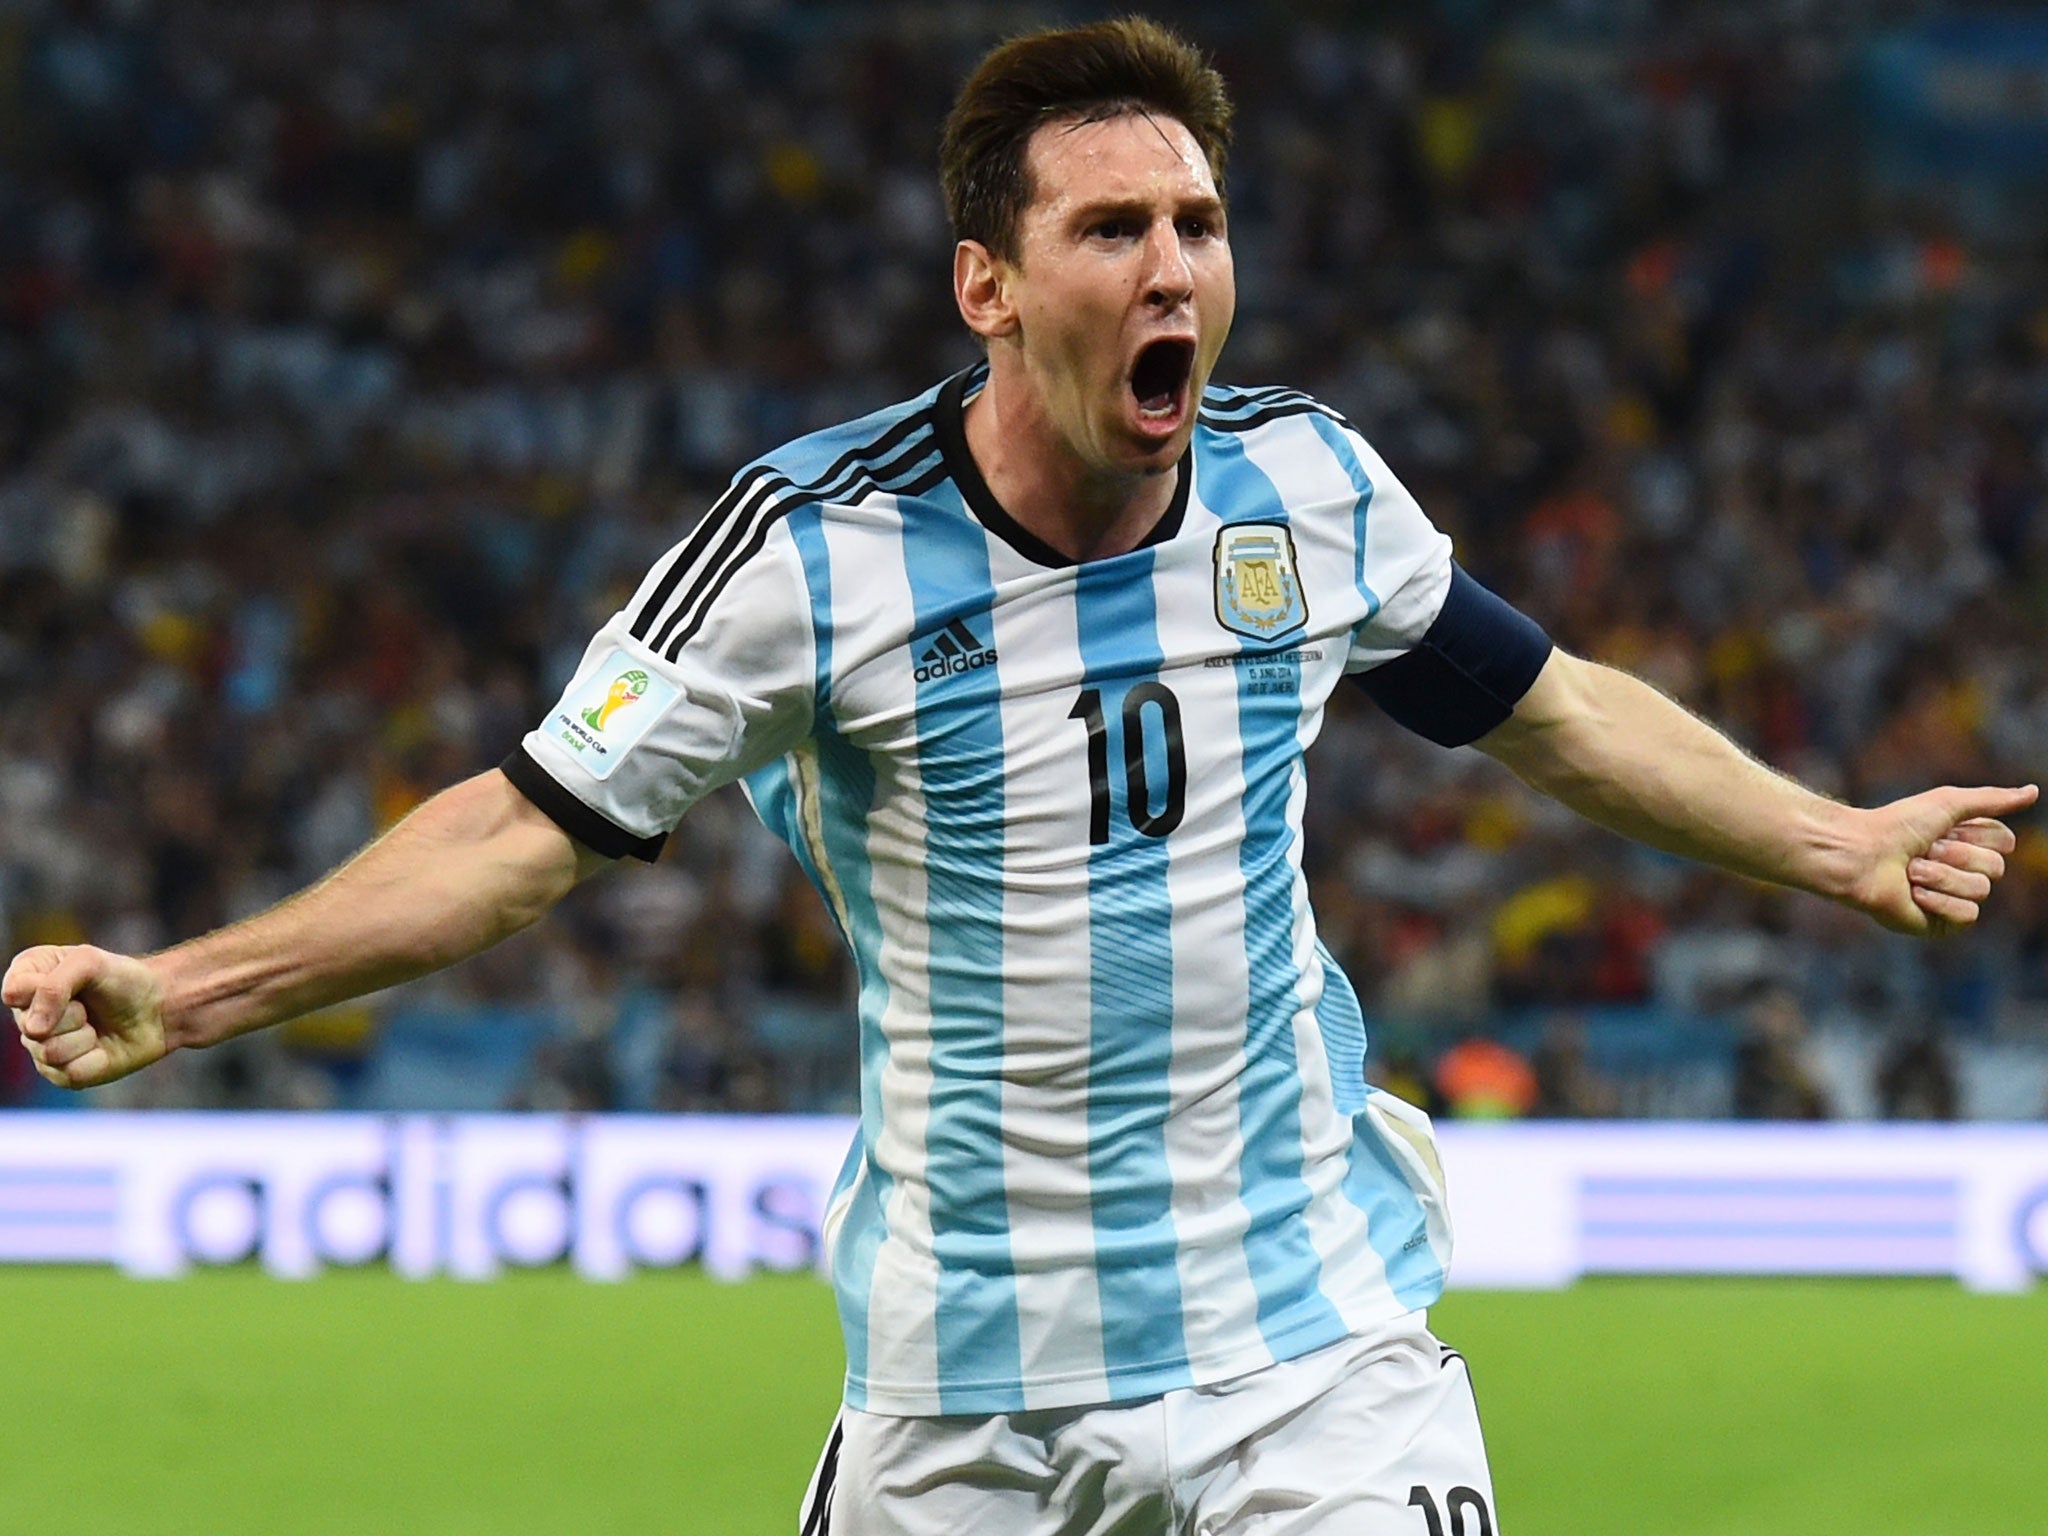 Lionel Messi spoke of his 'big relief' after scoring a superb goal for Argentina against Bosnia-Herzegovina